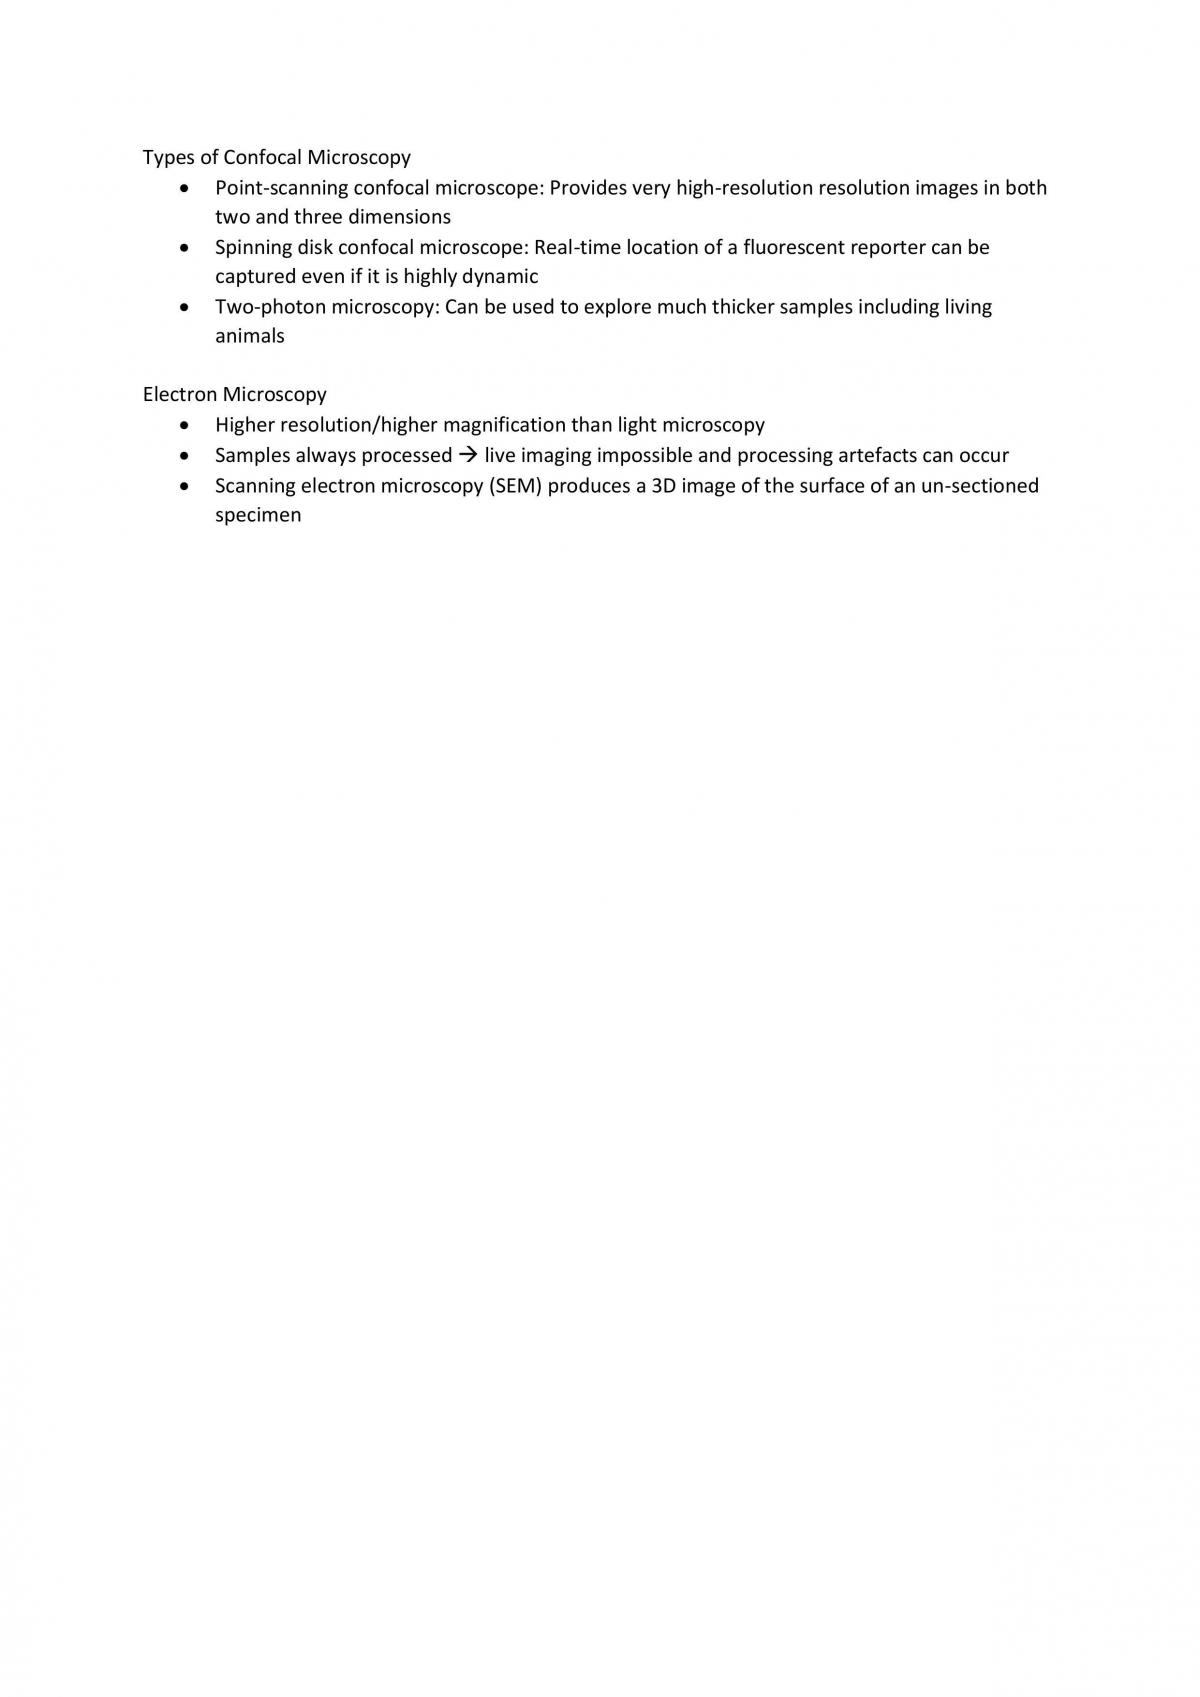 BIOL2200 Mid-Semester Exam Revision Notes - Page 23